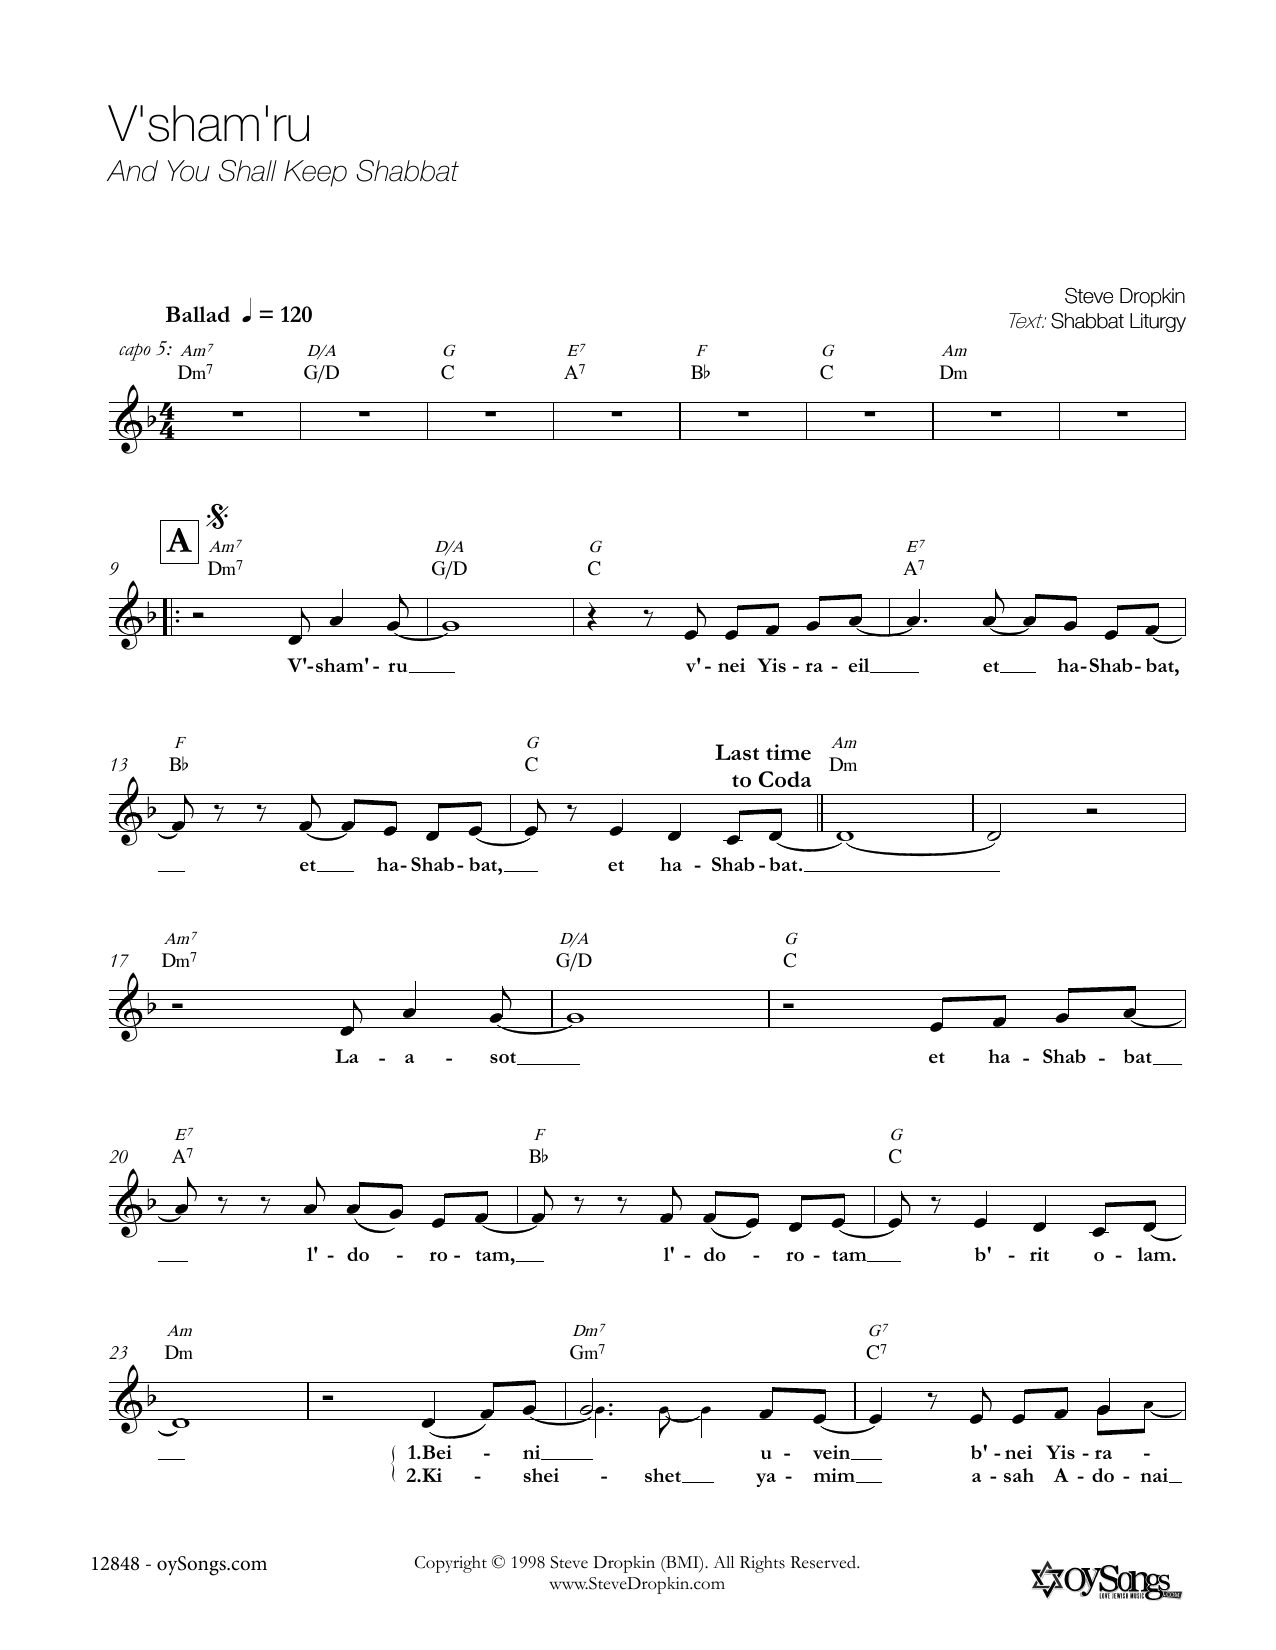 Steve Dropkin V'Sham'Ru Sheet Music Notes & Chords for Melody Line, Lyrics & Chords - Download or Print PDF